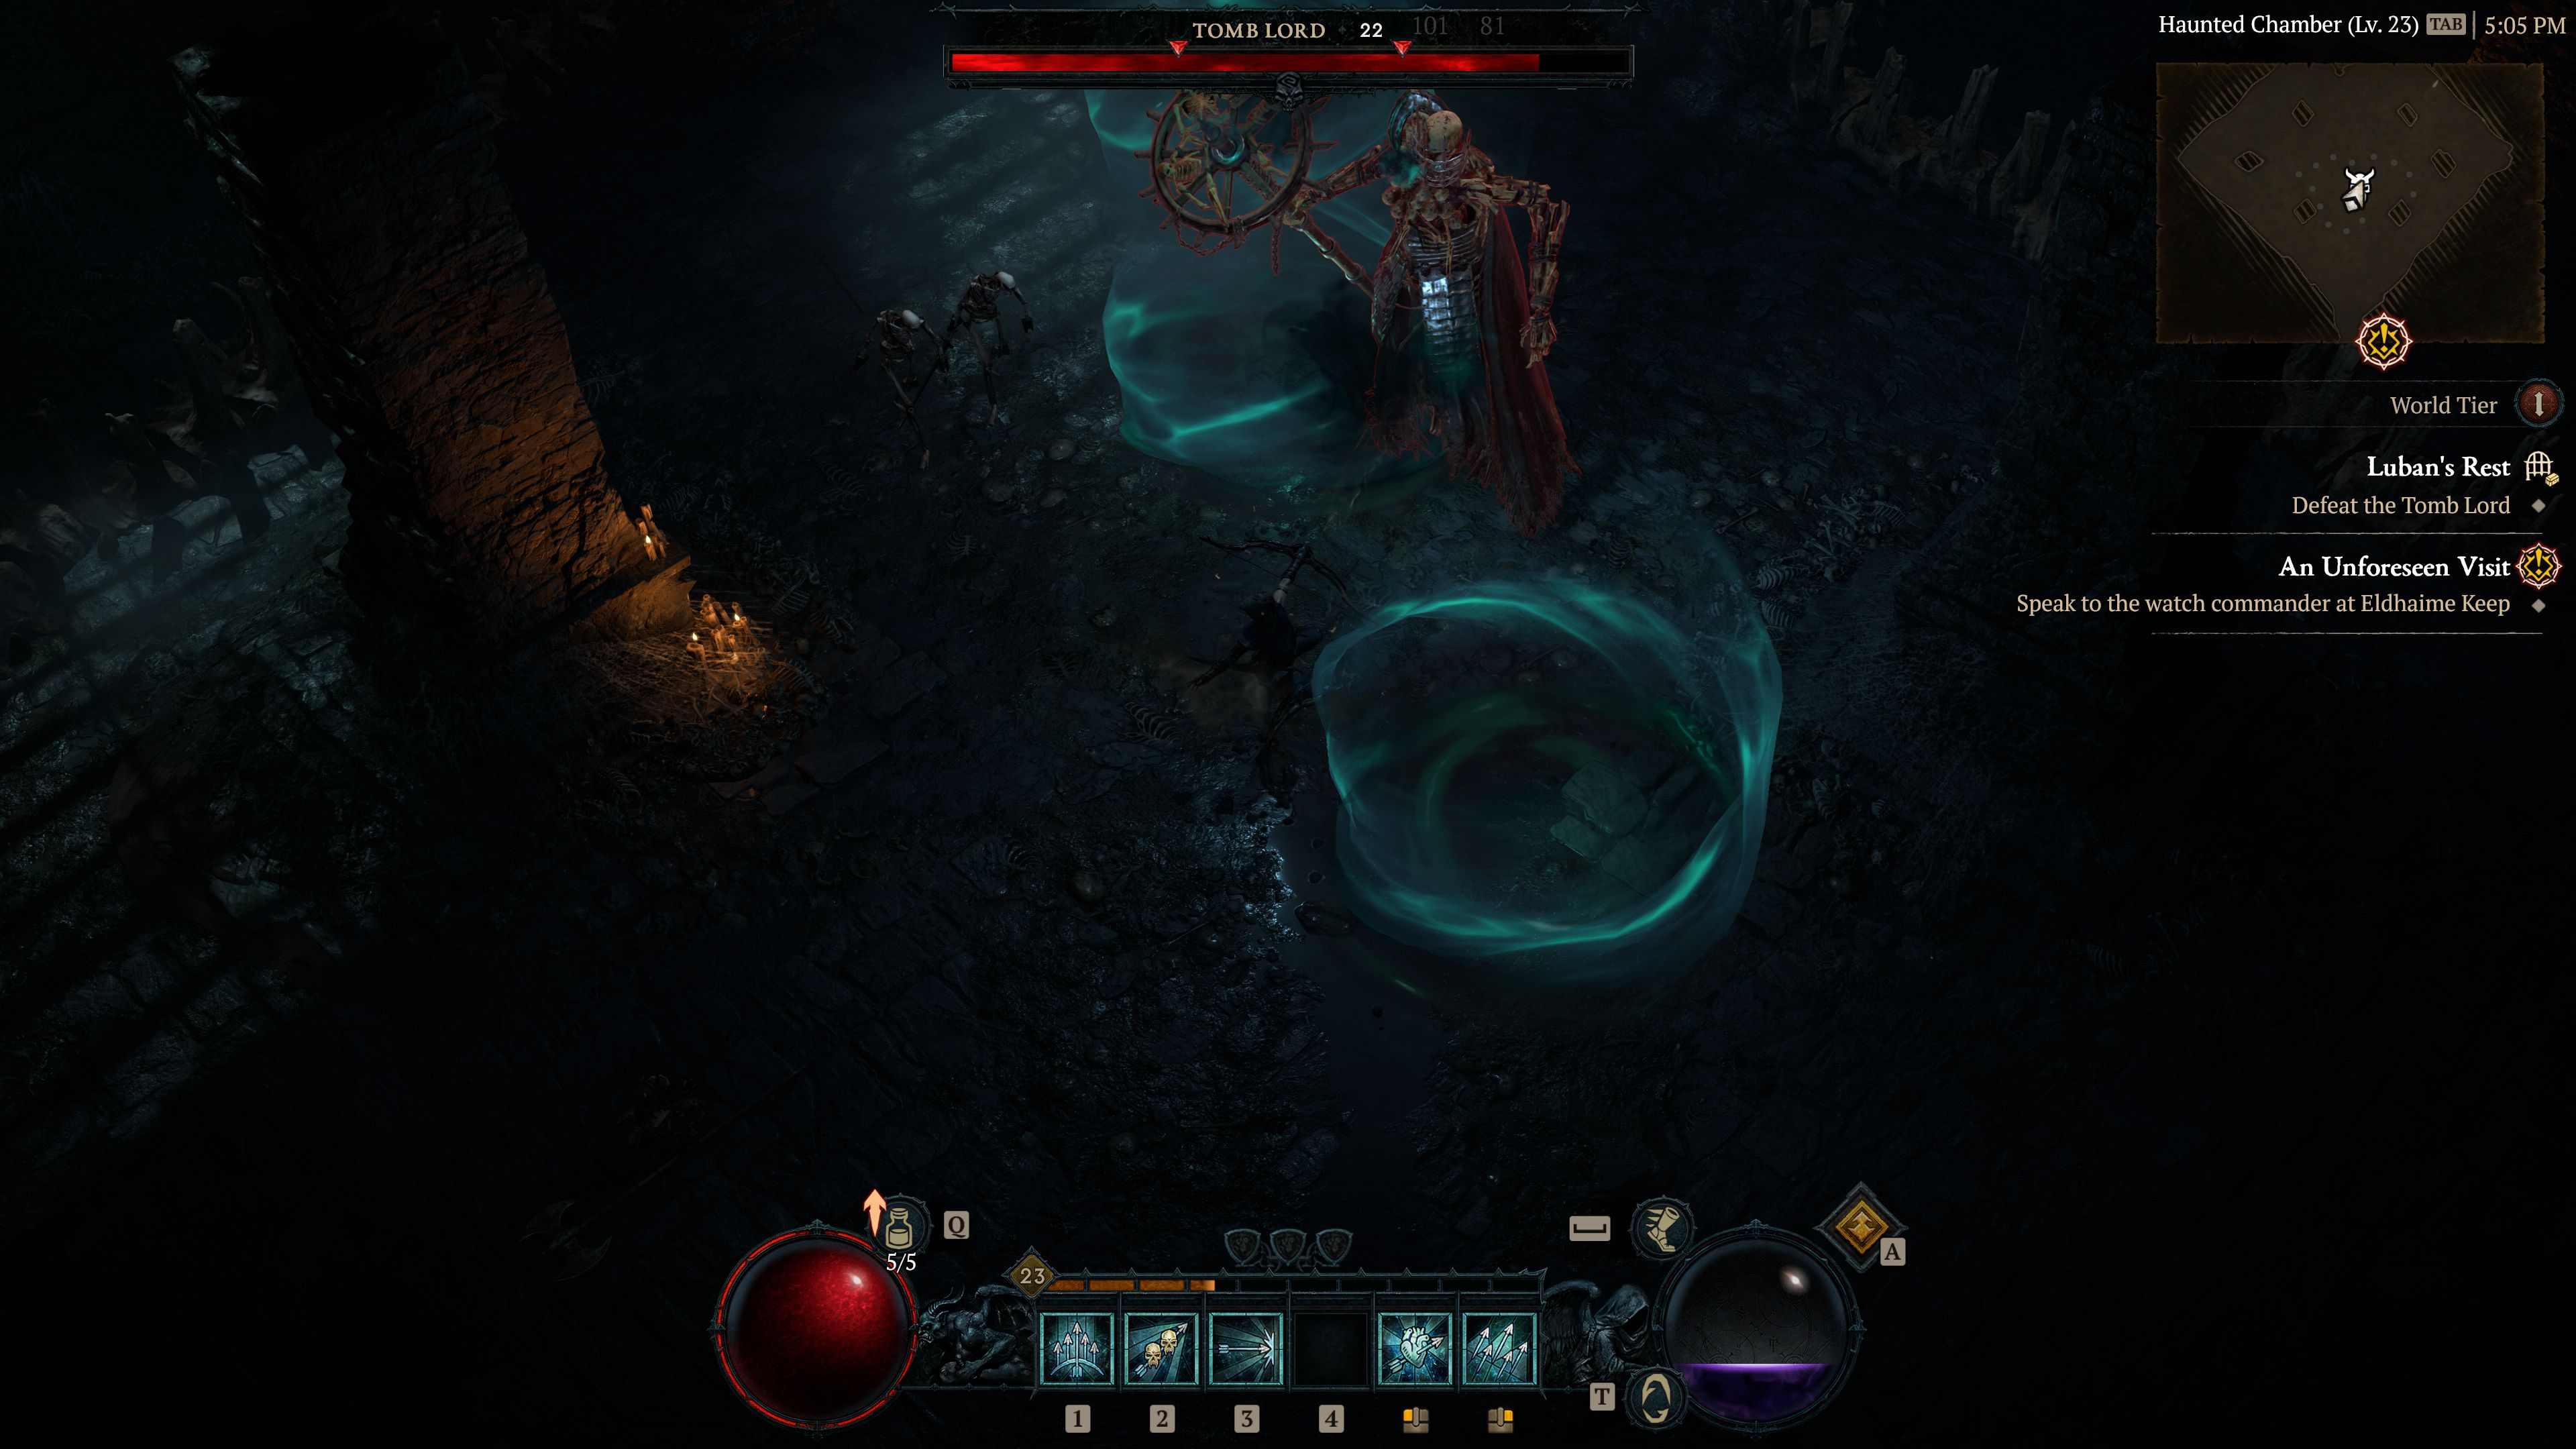 Diablo IV Rogue Player Melawan Tomb Lord Final Boss Di Luban's Rest Dungeon